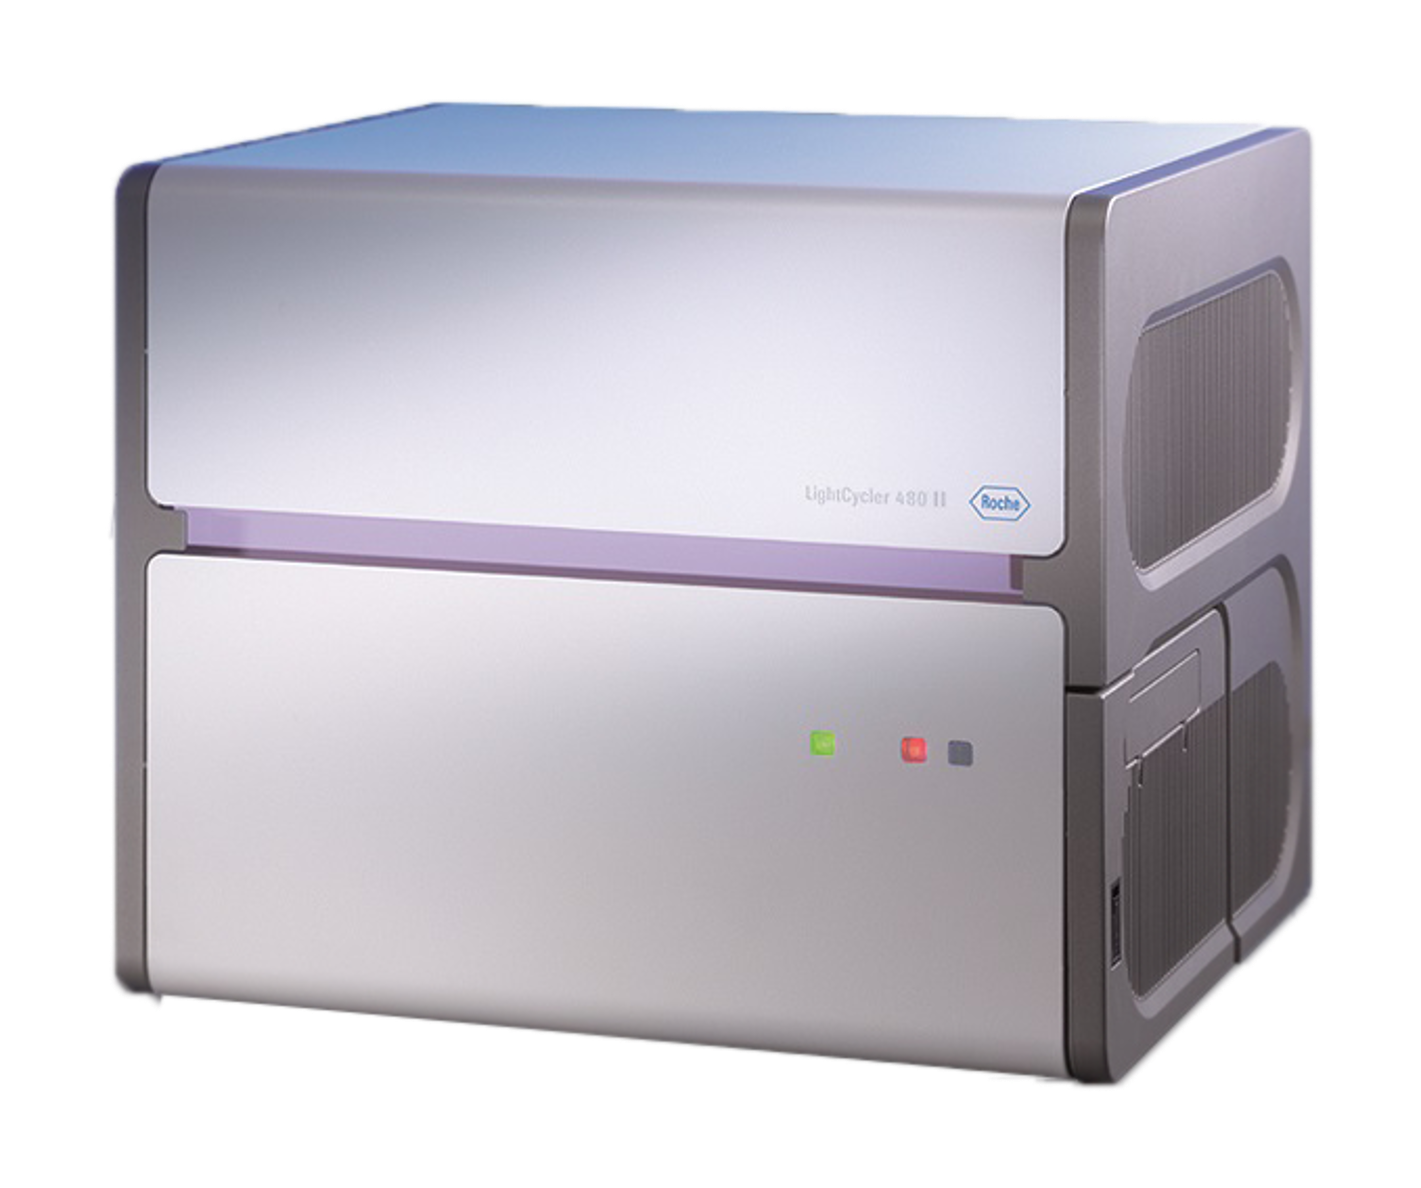 Roche LightCycler 480 II 荧光定量PCR仪（384孔）（华家池）